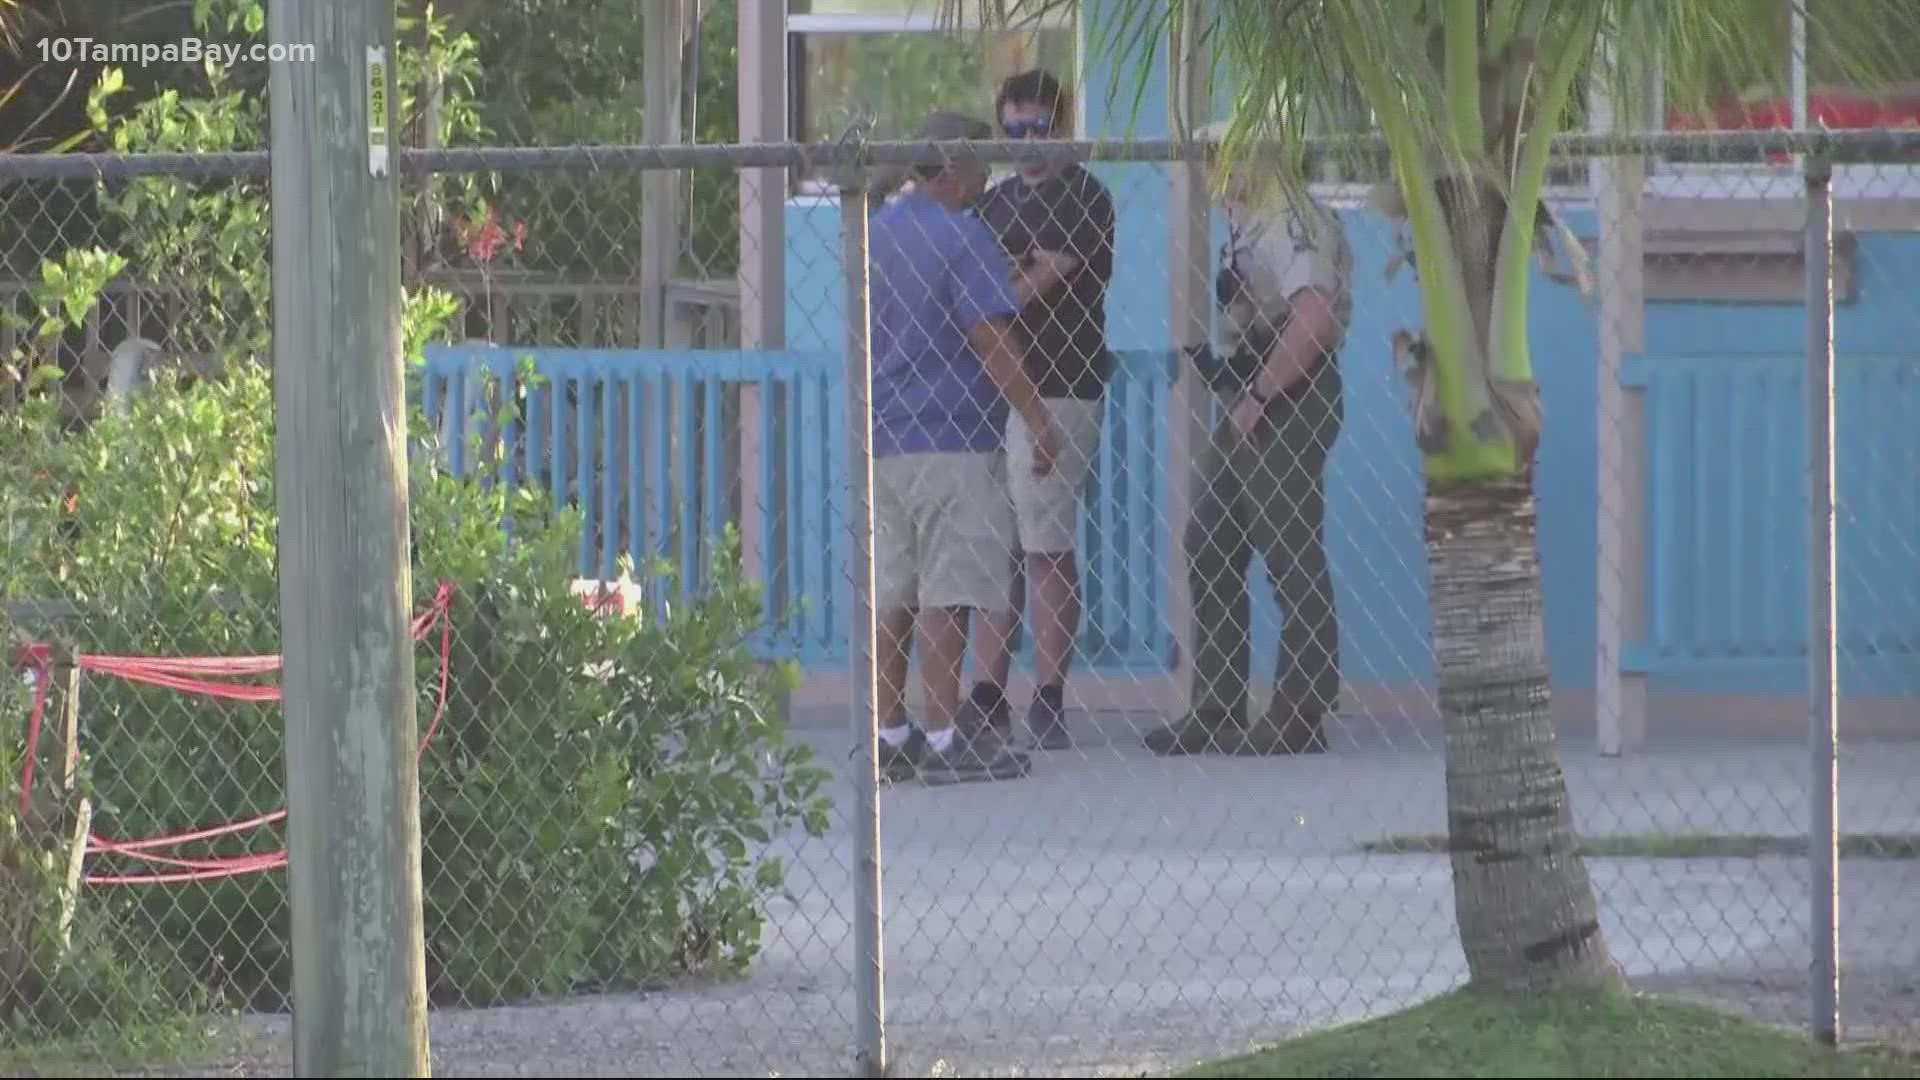 Tiger attacks employee at Florida animal sanctuary 